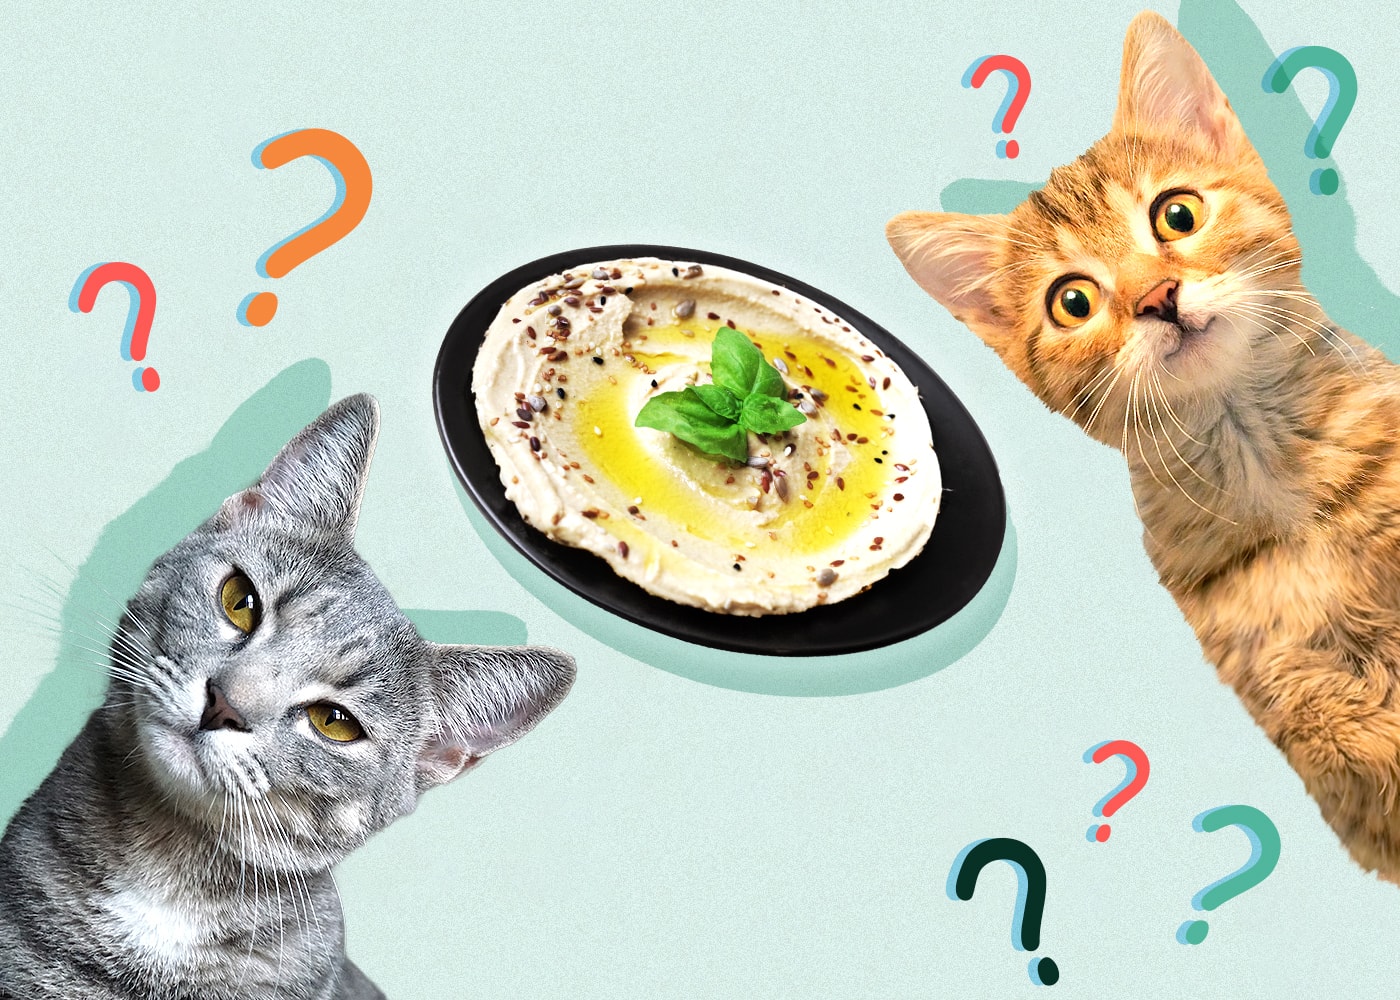 Can Cats Eat hummus